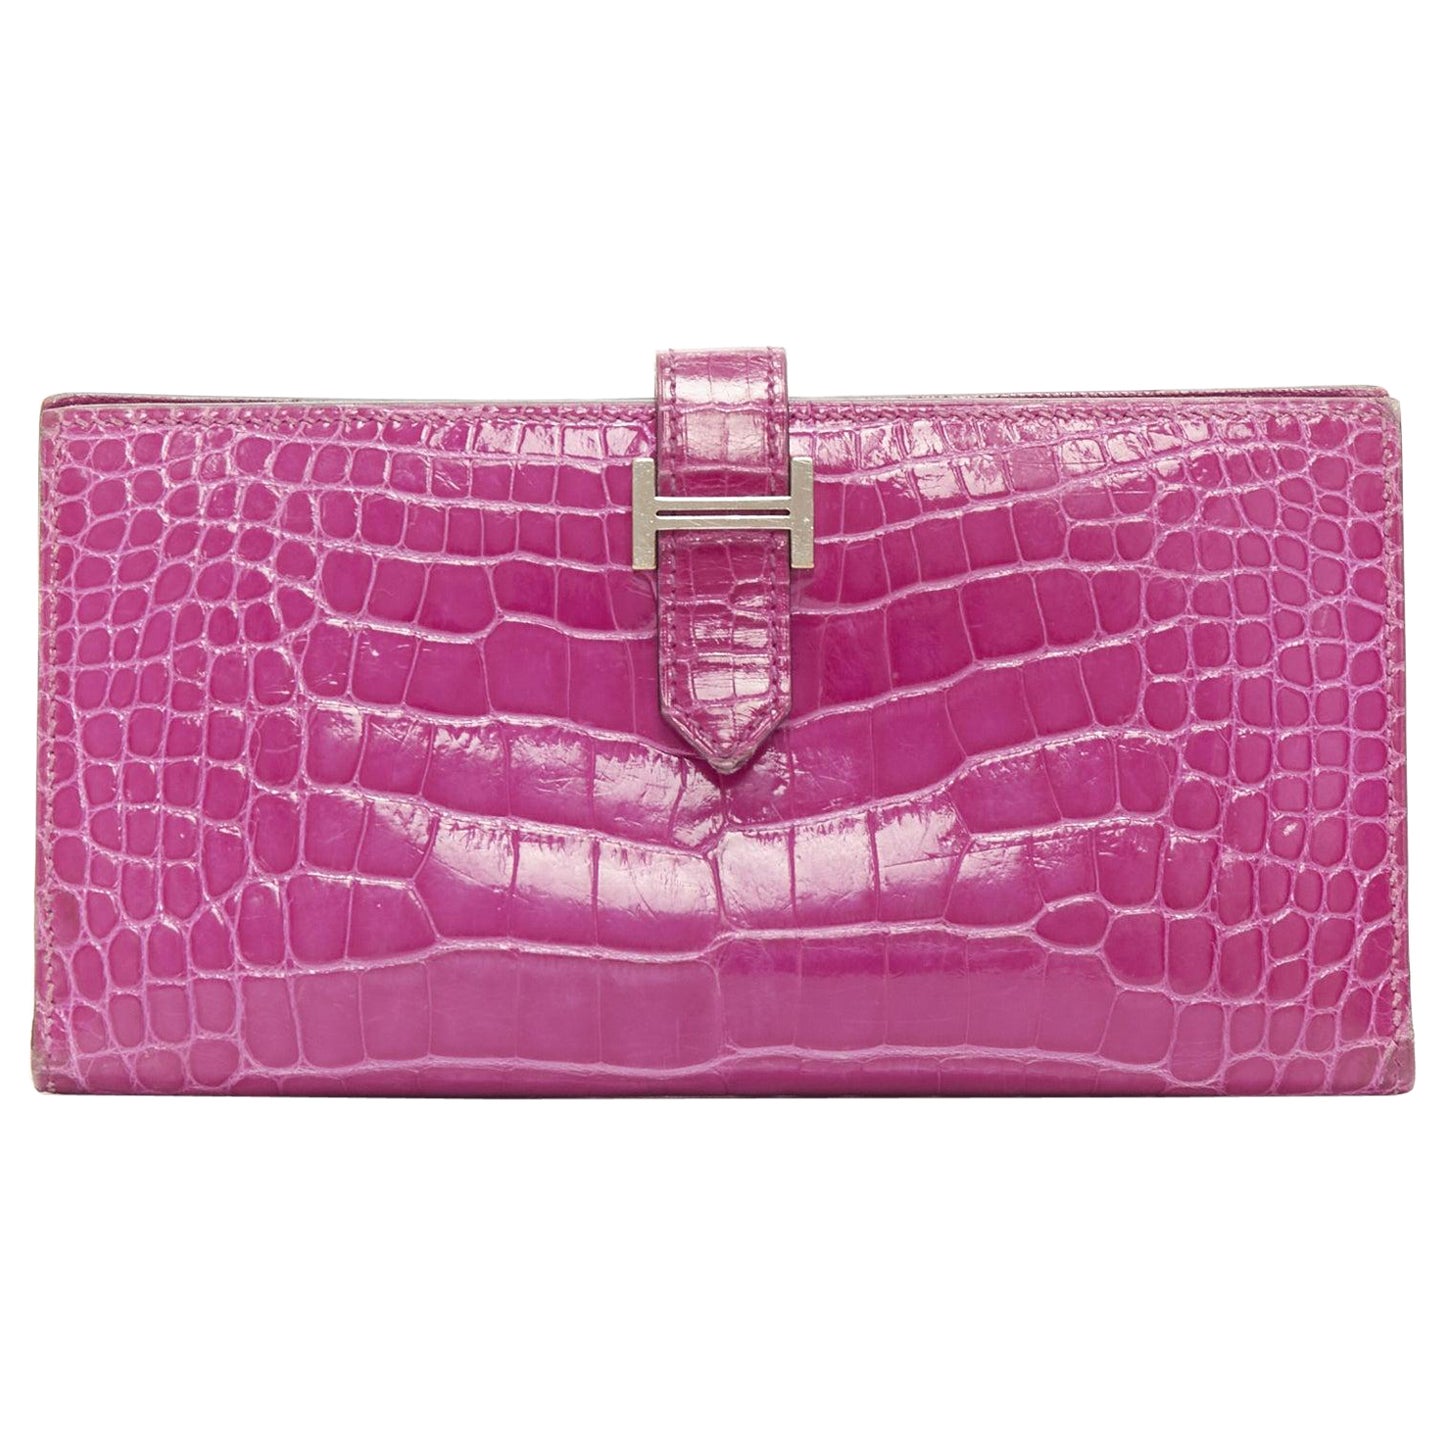 HERMES Bearne Soufflet Rose purple shiny scaled leather long wallet For Sale